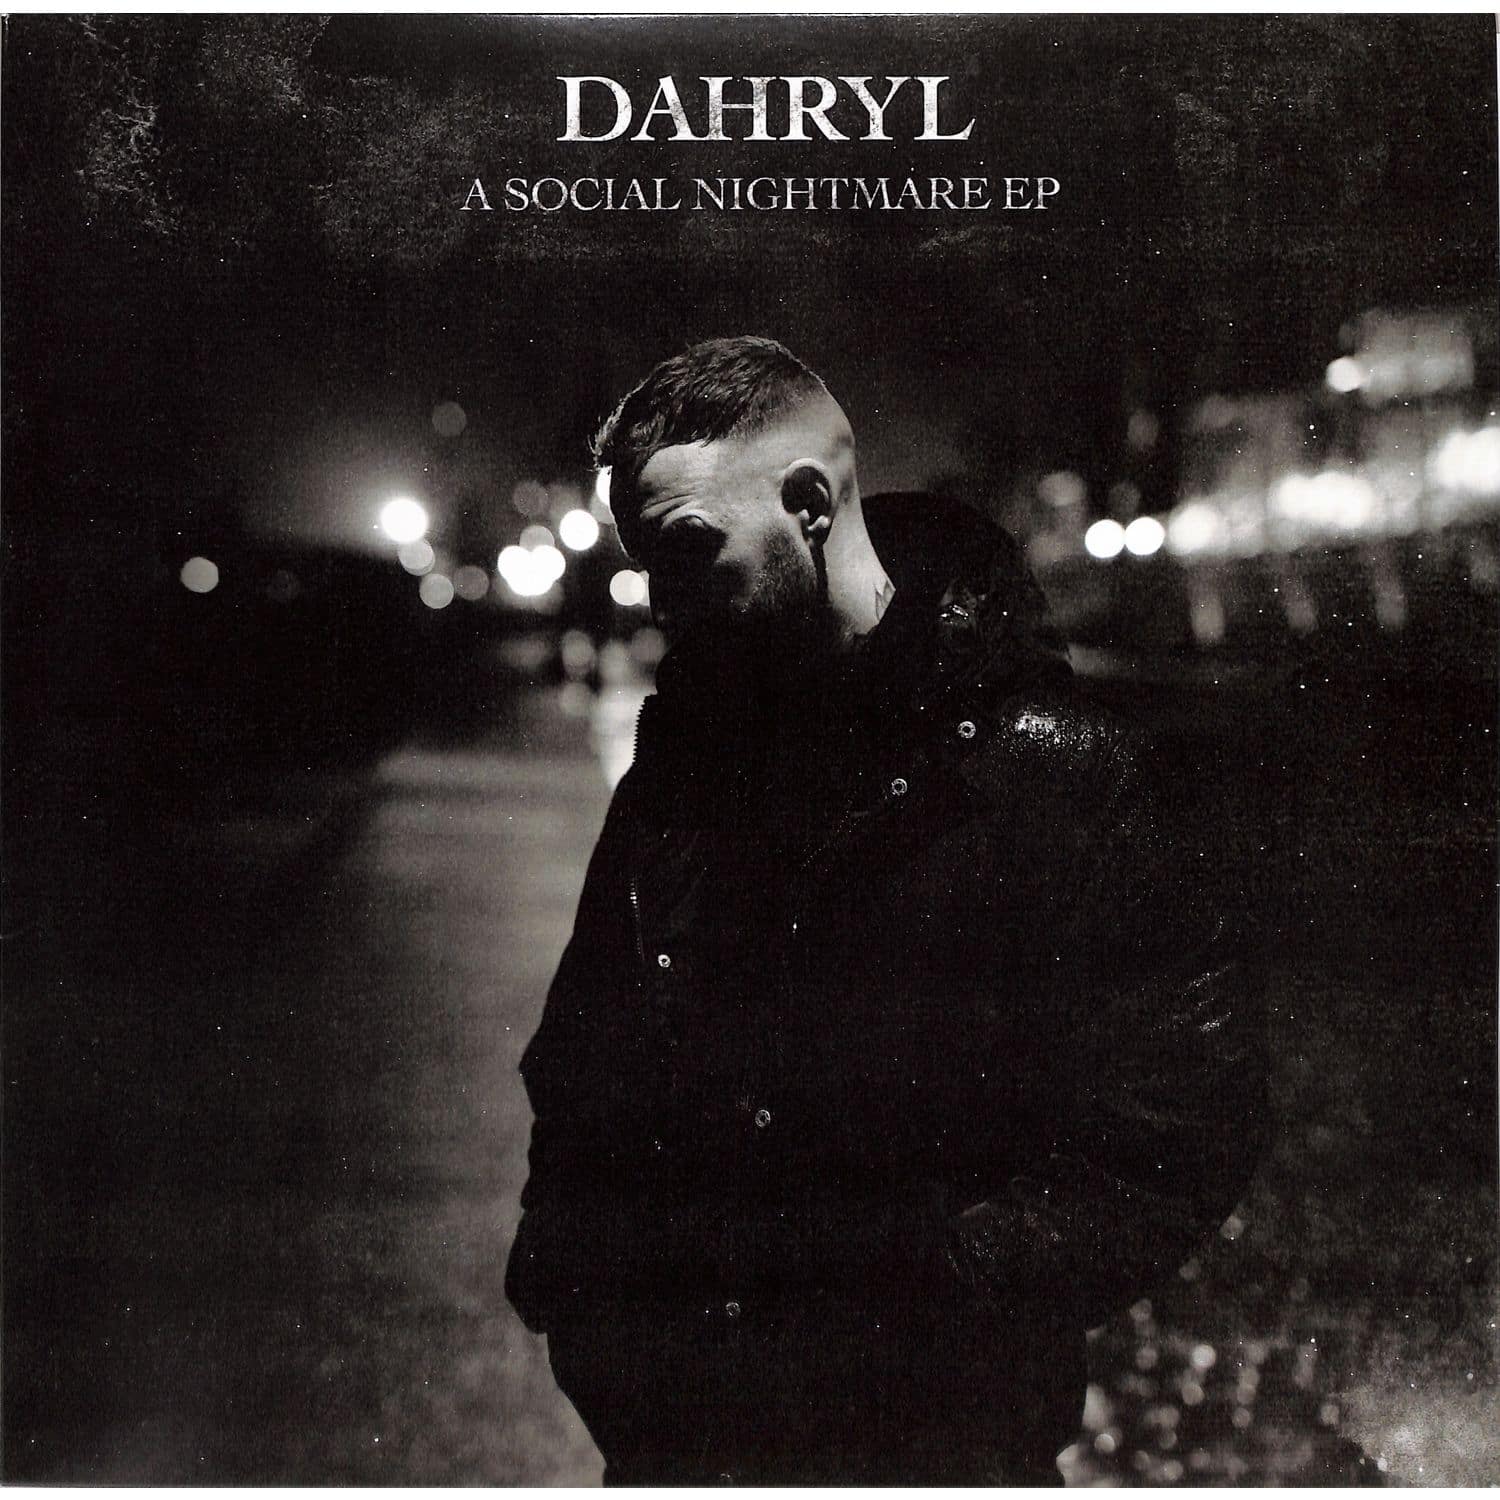 Dahryl - A SOCIAL NIGHTMARE EP